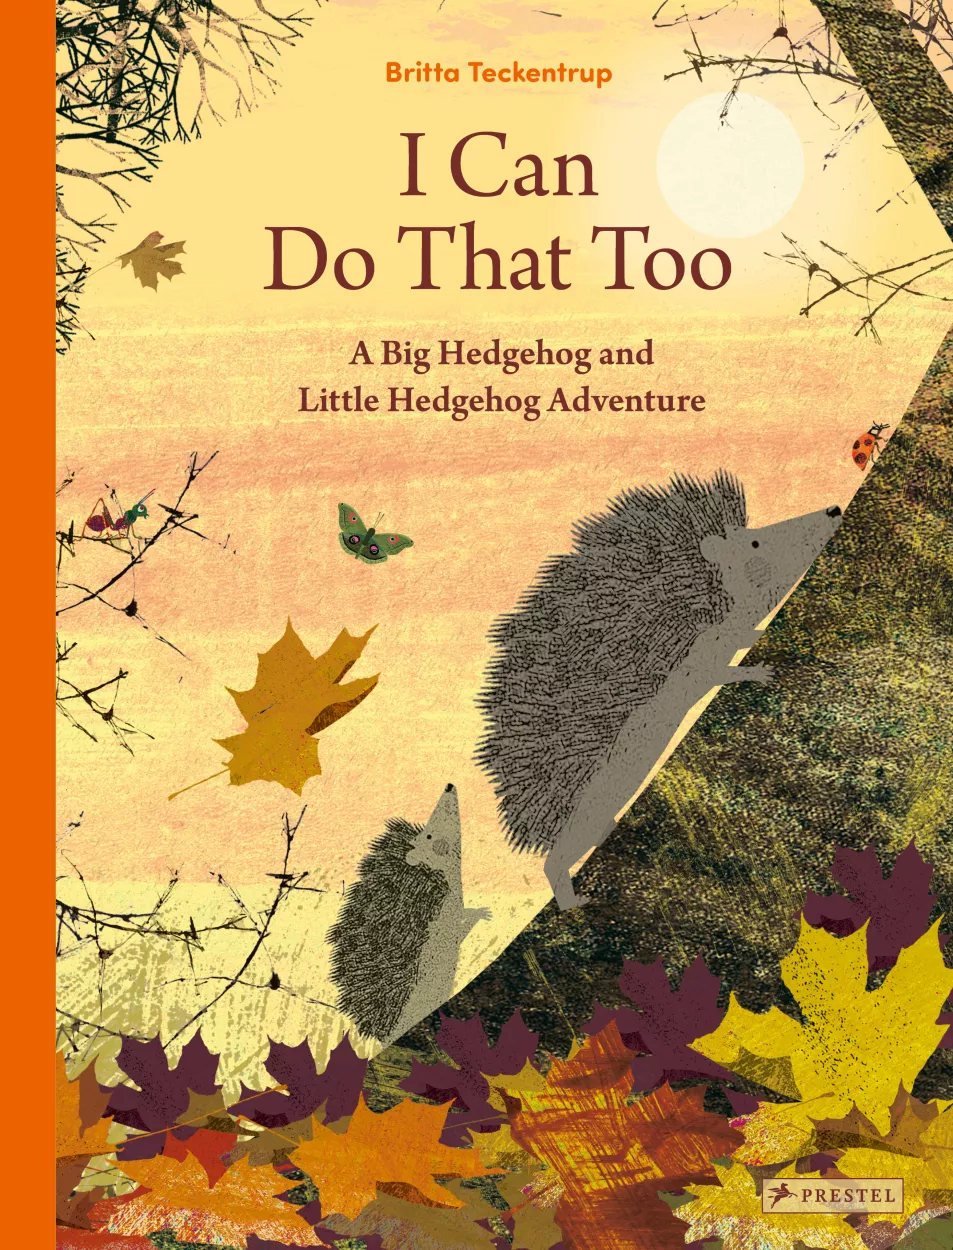 I Can Do That Too: A Big Hedgehog and Little Hedgehog Adventure by Britta Teckentrup